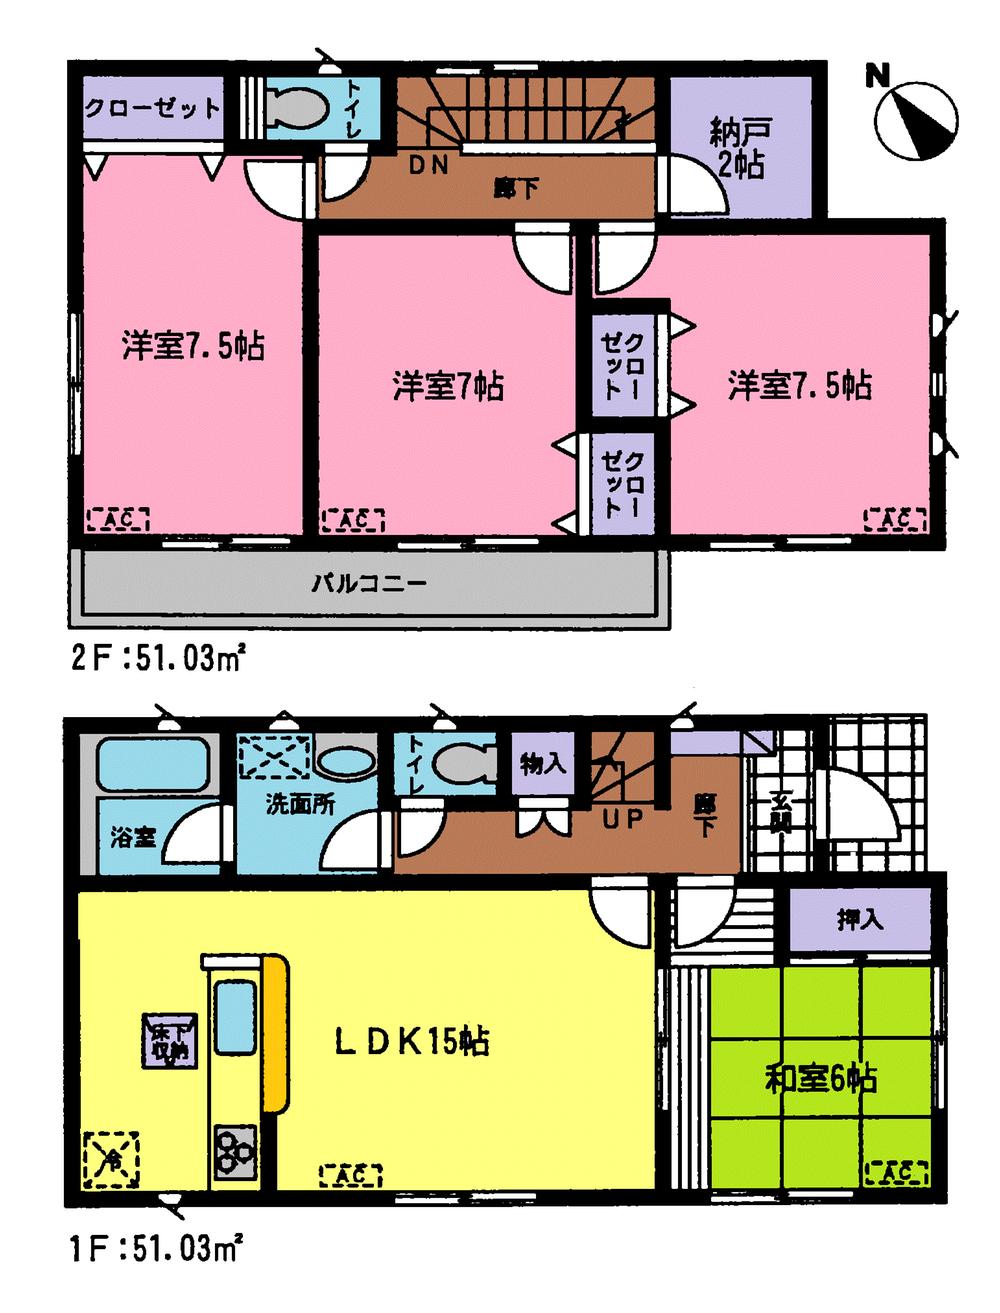 Floor plan. (1 Building), Price 22,800,000 yen, 4LDK+S, Land area 154.2 sq m , Building area 102.06 sq m